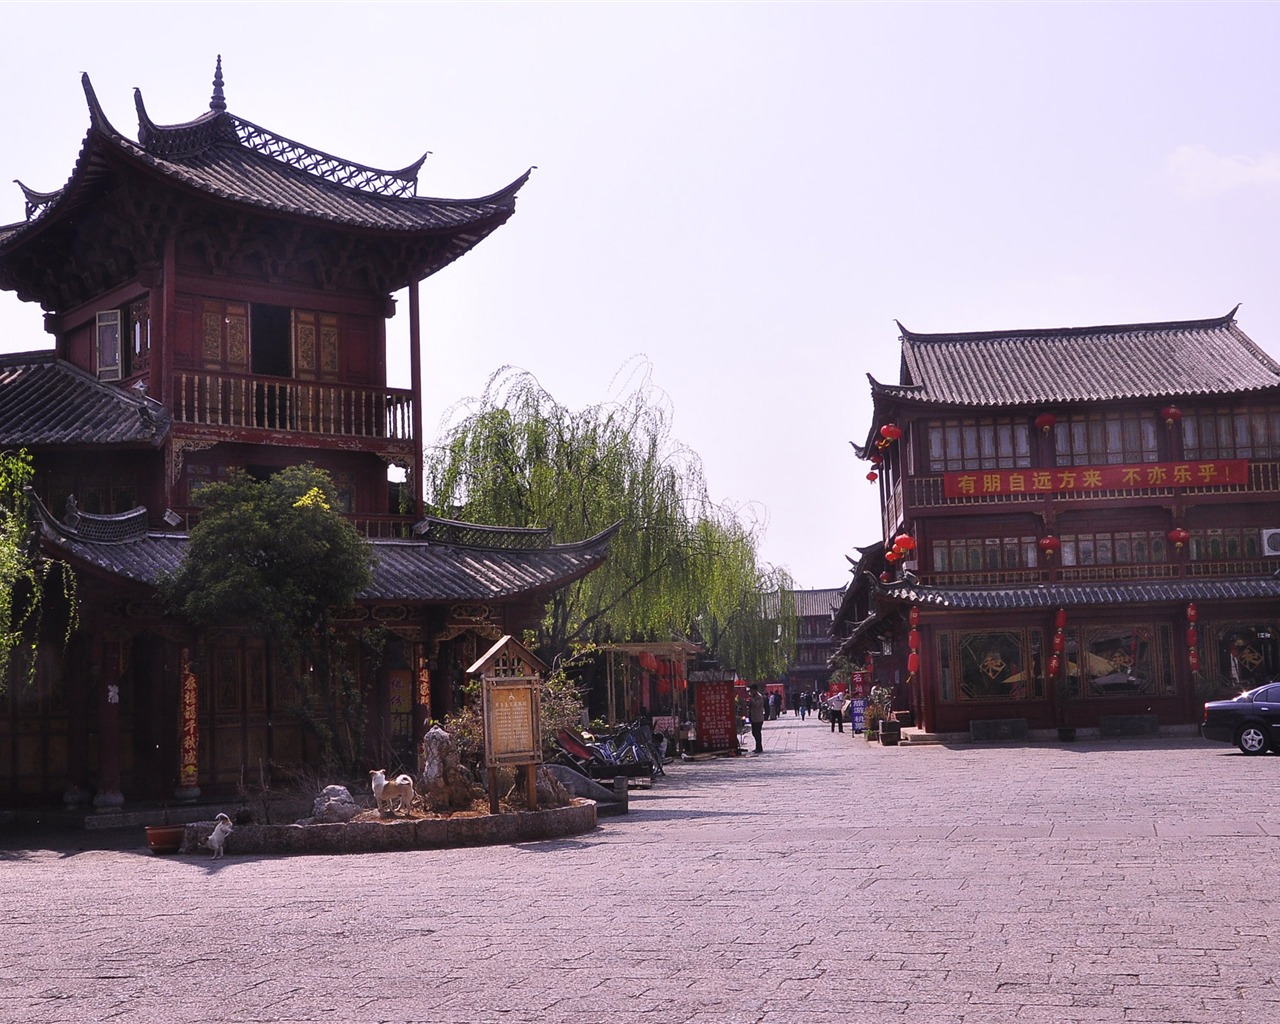 Lijiang ancient town atmosphere (2) (old Hong OK works) #19 - 1280x1024